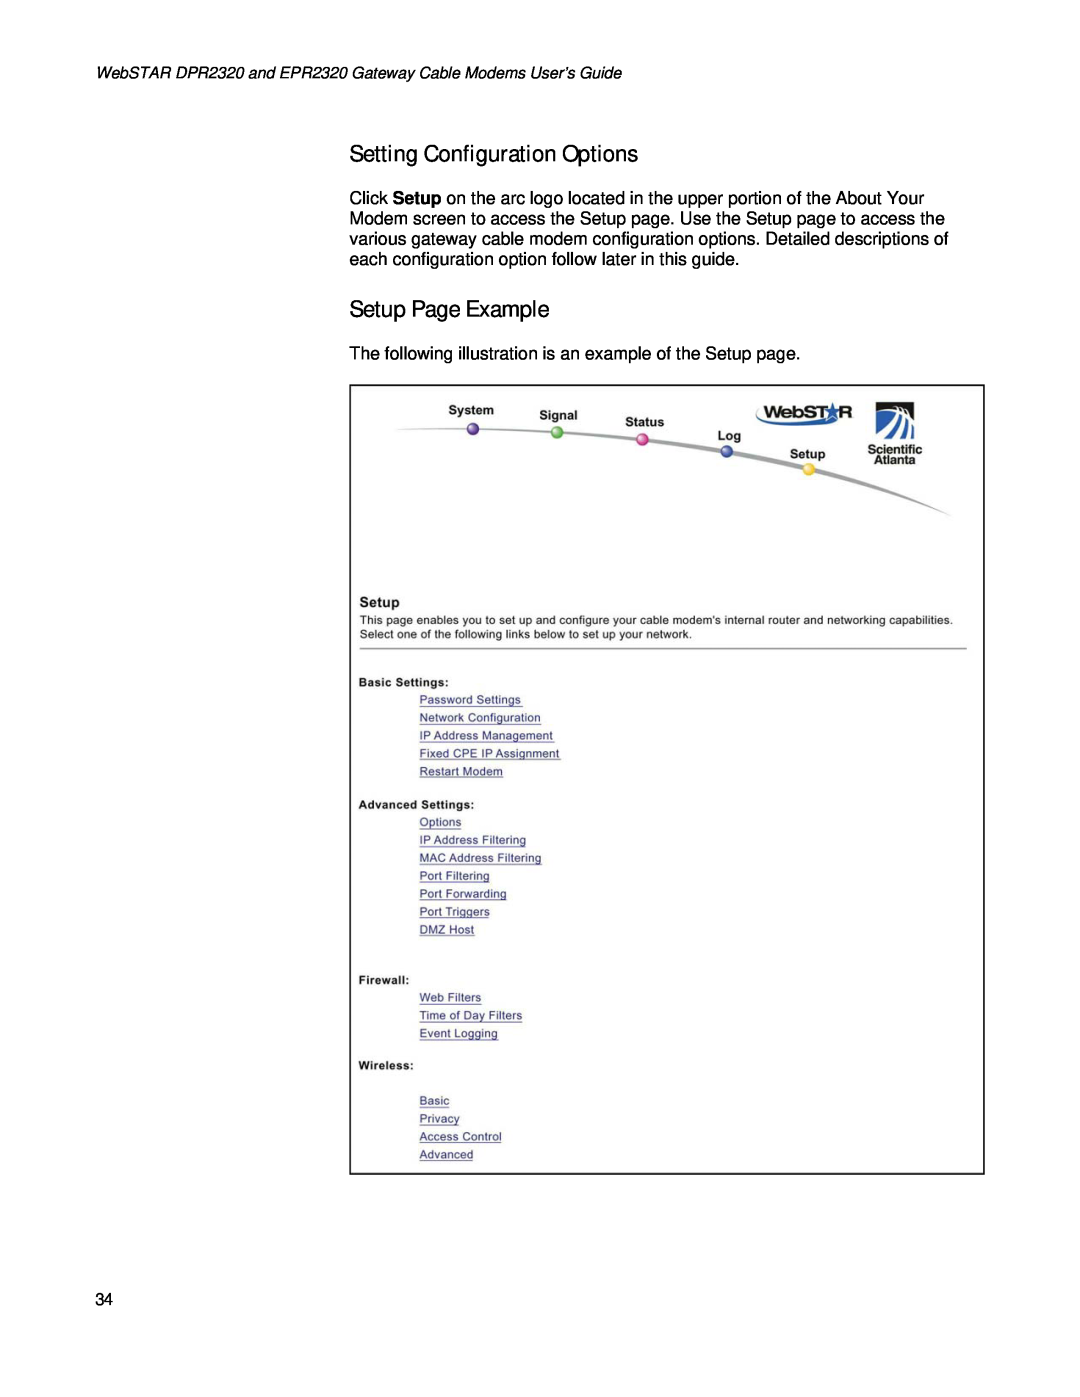 Apple DPR2320TM, EPR2320TM manual Setting Configuration Options, Setup Page Example 